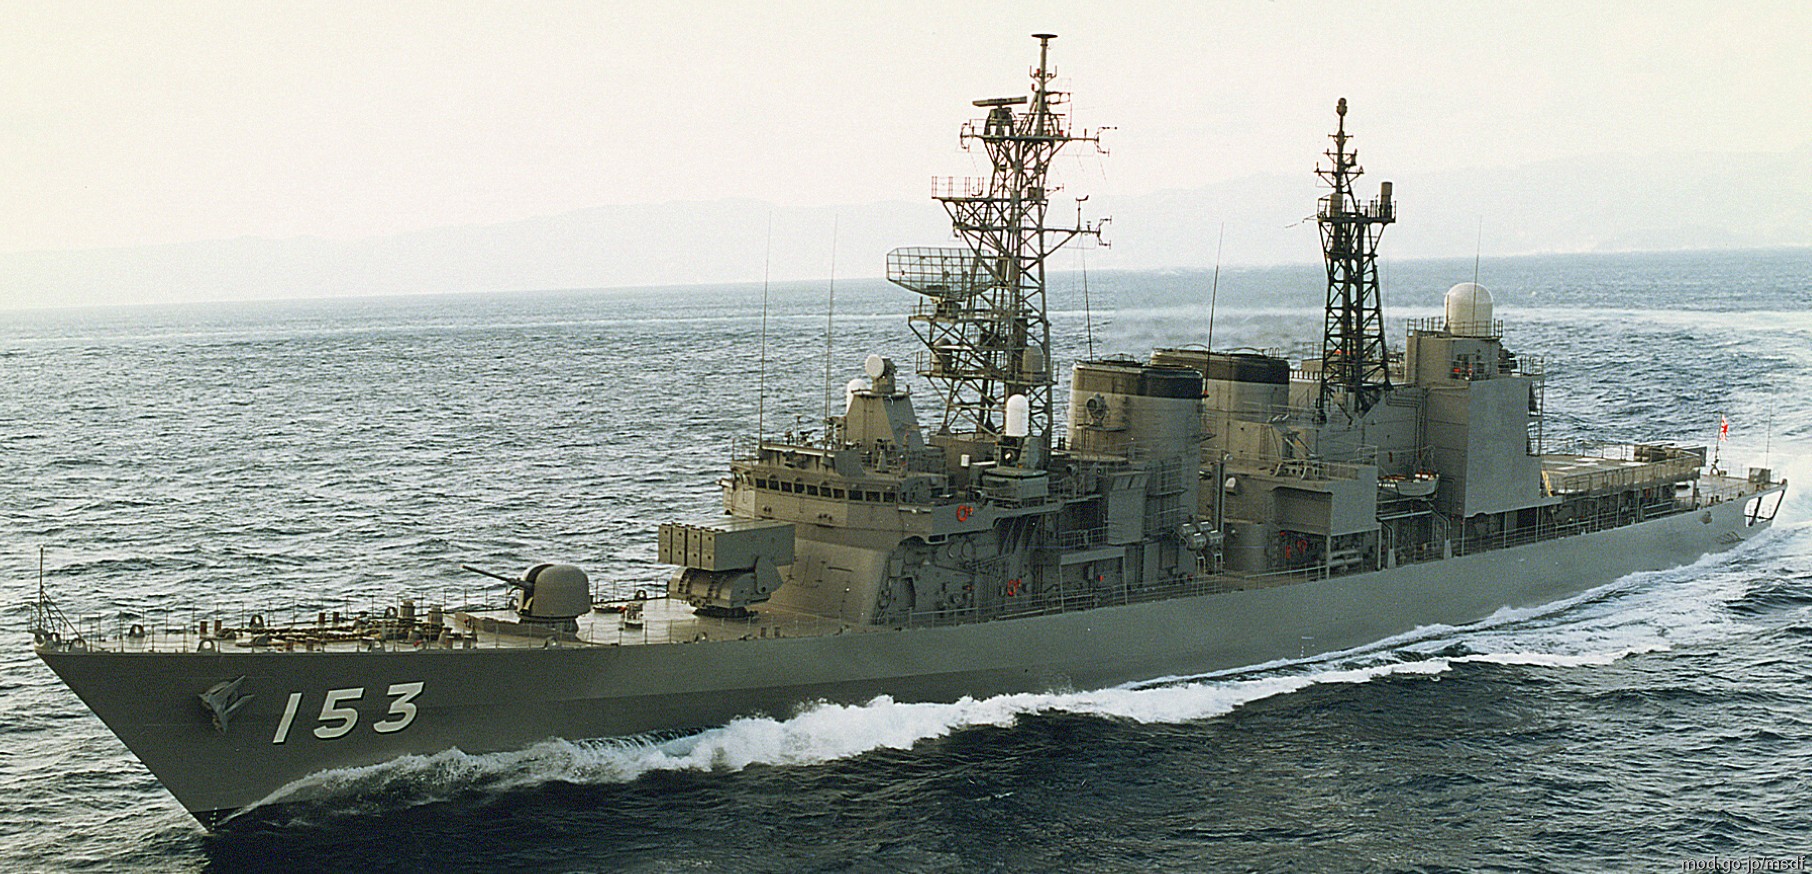 dd-153 js yugiri asagiri class destroyer japan maritime self defense force jmsdf 08